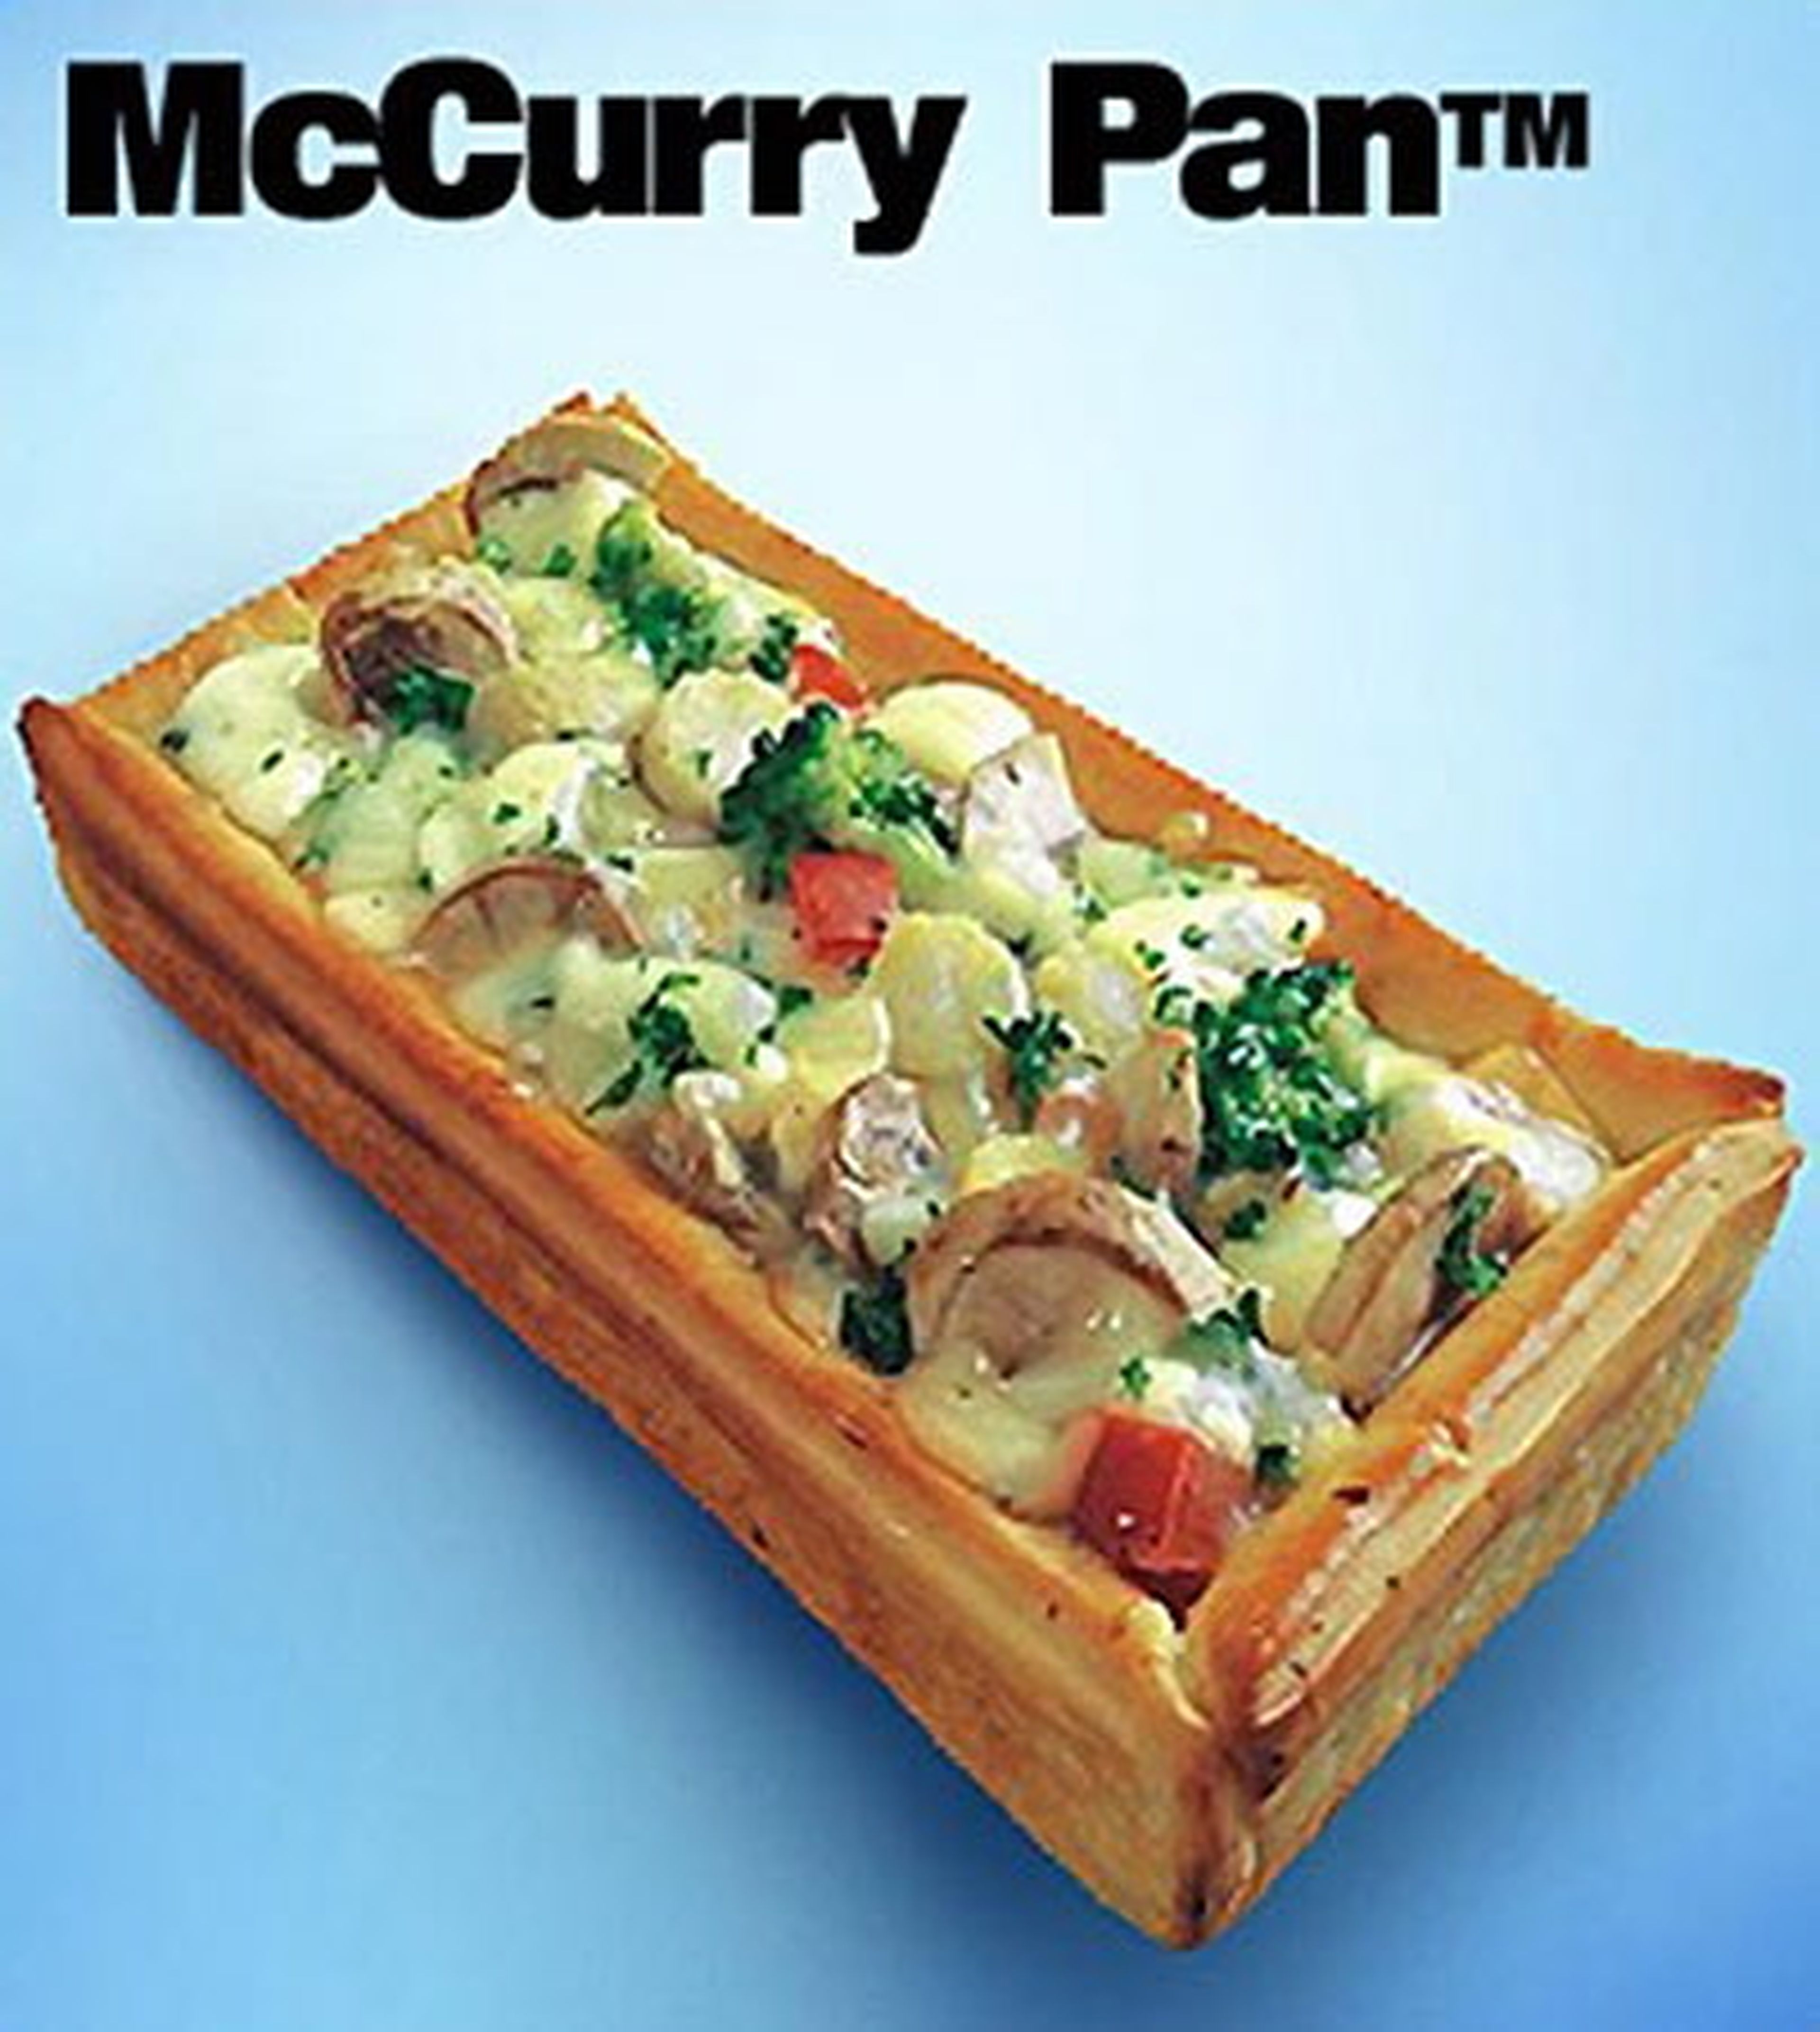 McCurry Pan, de McDonald's.